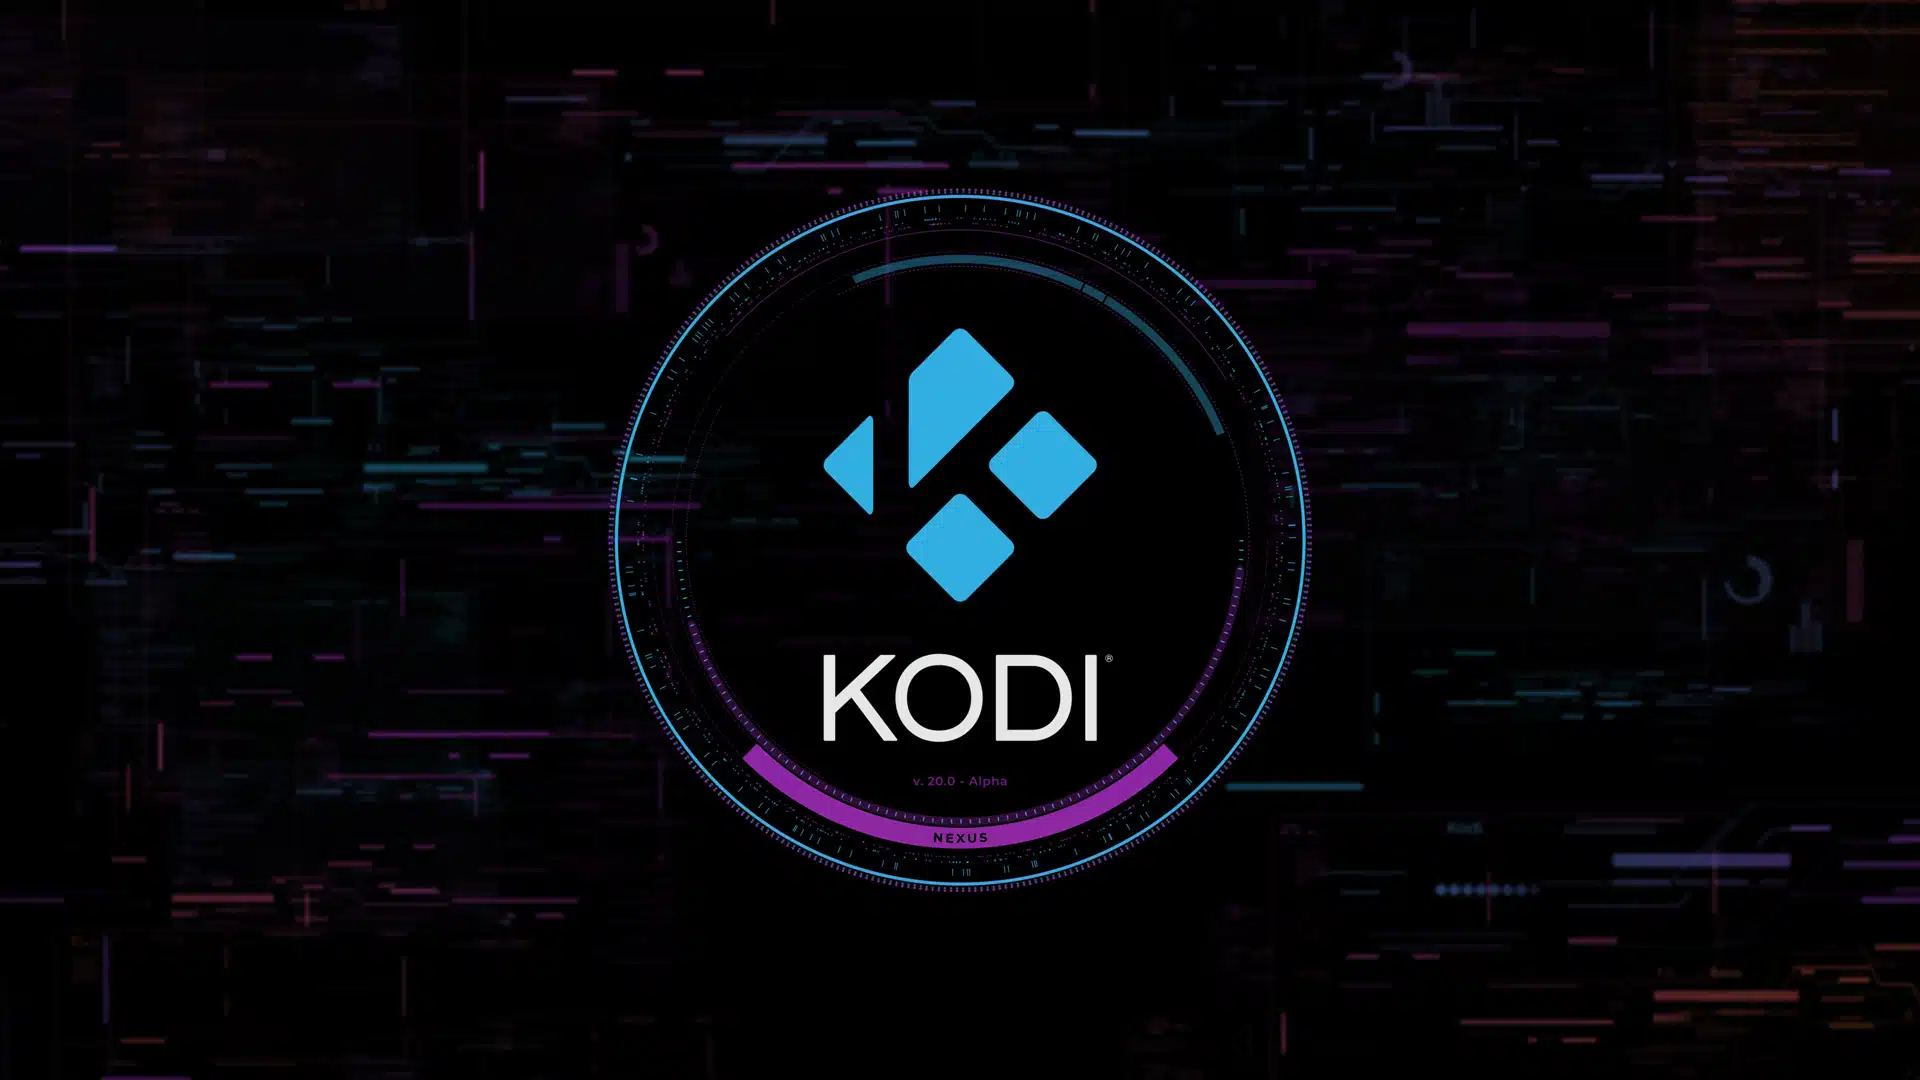 downloading Kodi 20.2